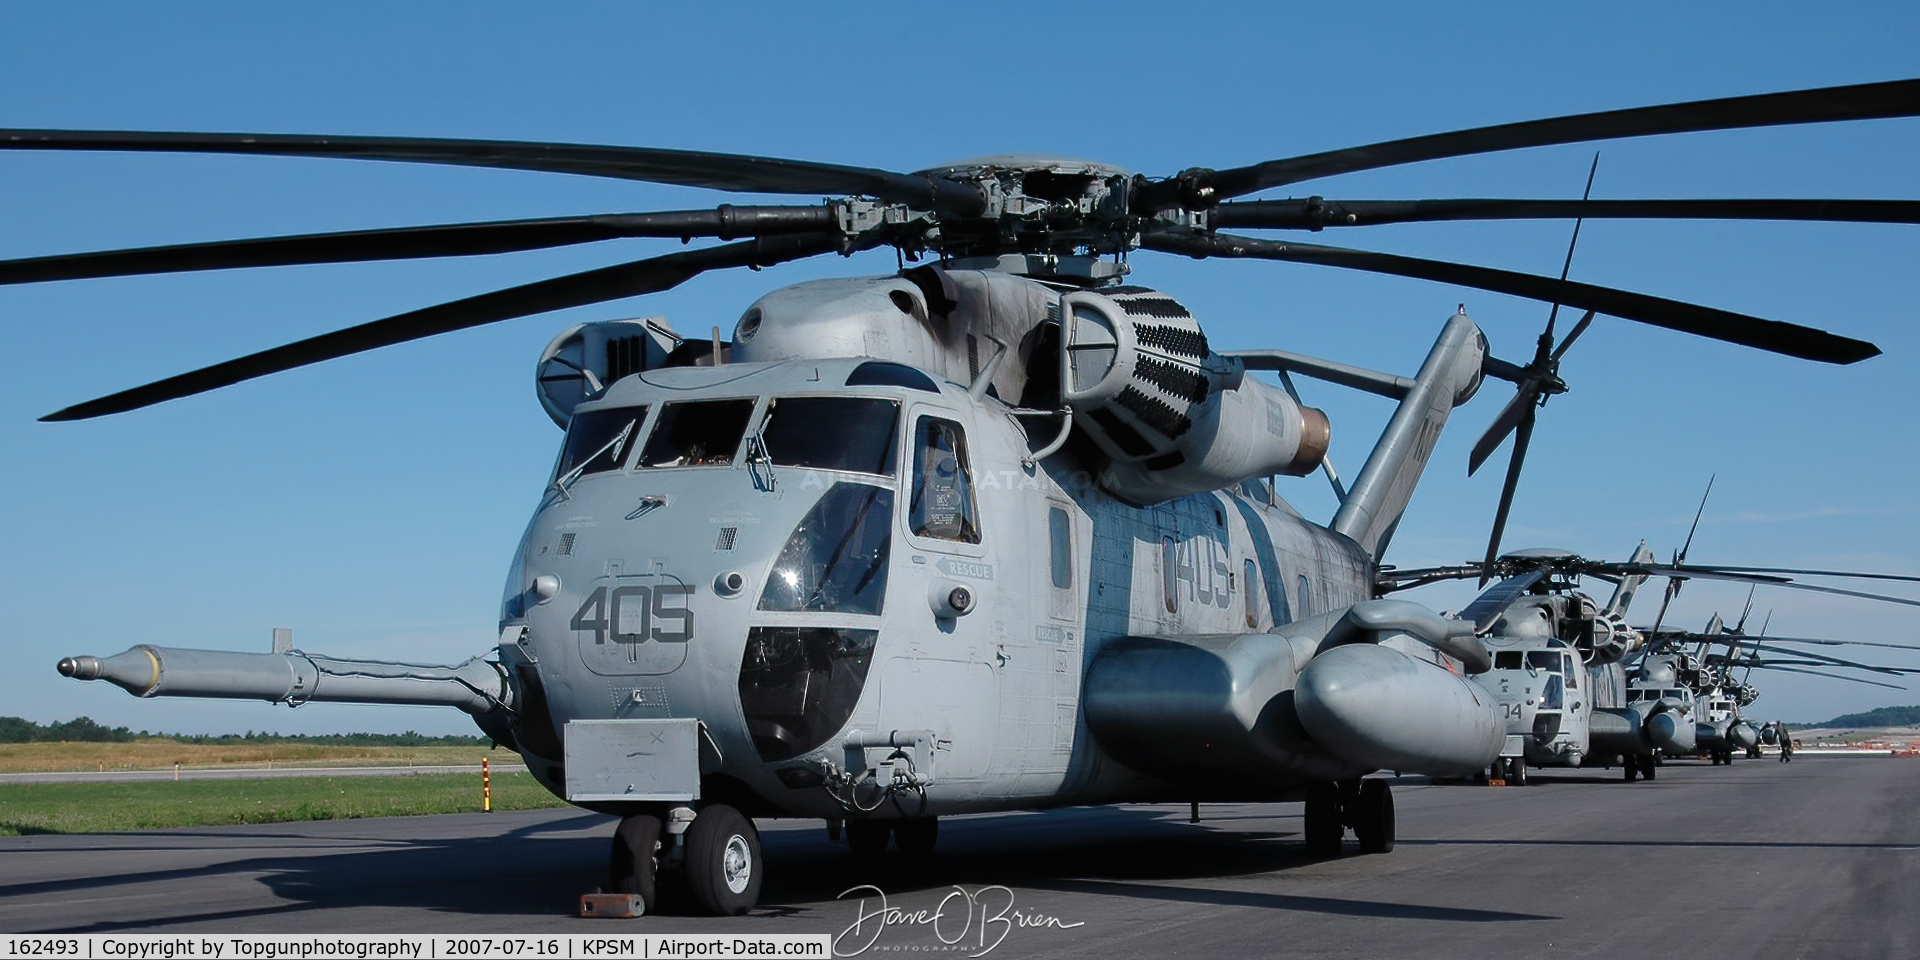 162493, Sikorsky CH-53E Super Stallion C/N 65-505, 4 ship of Stallions on the ramp